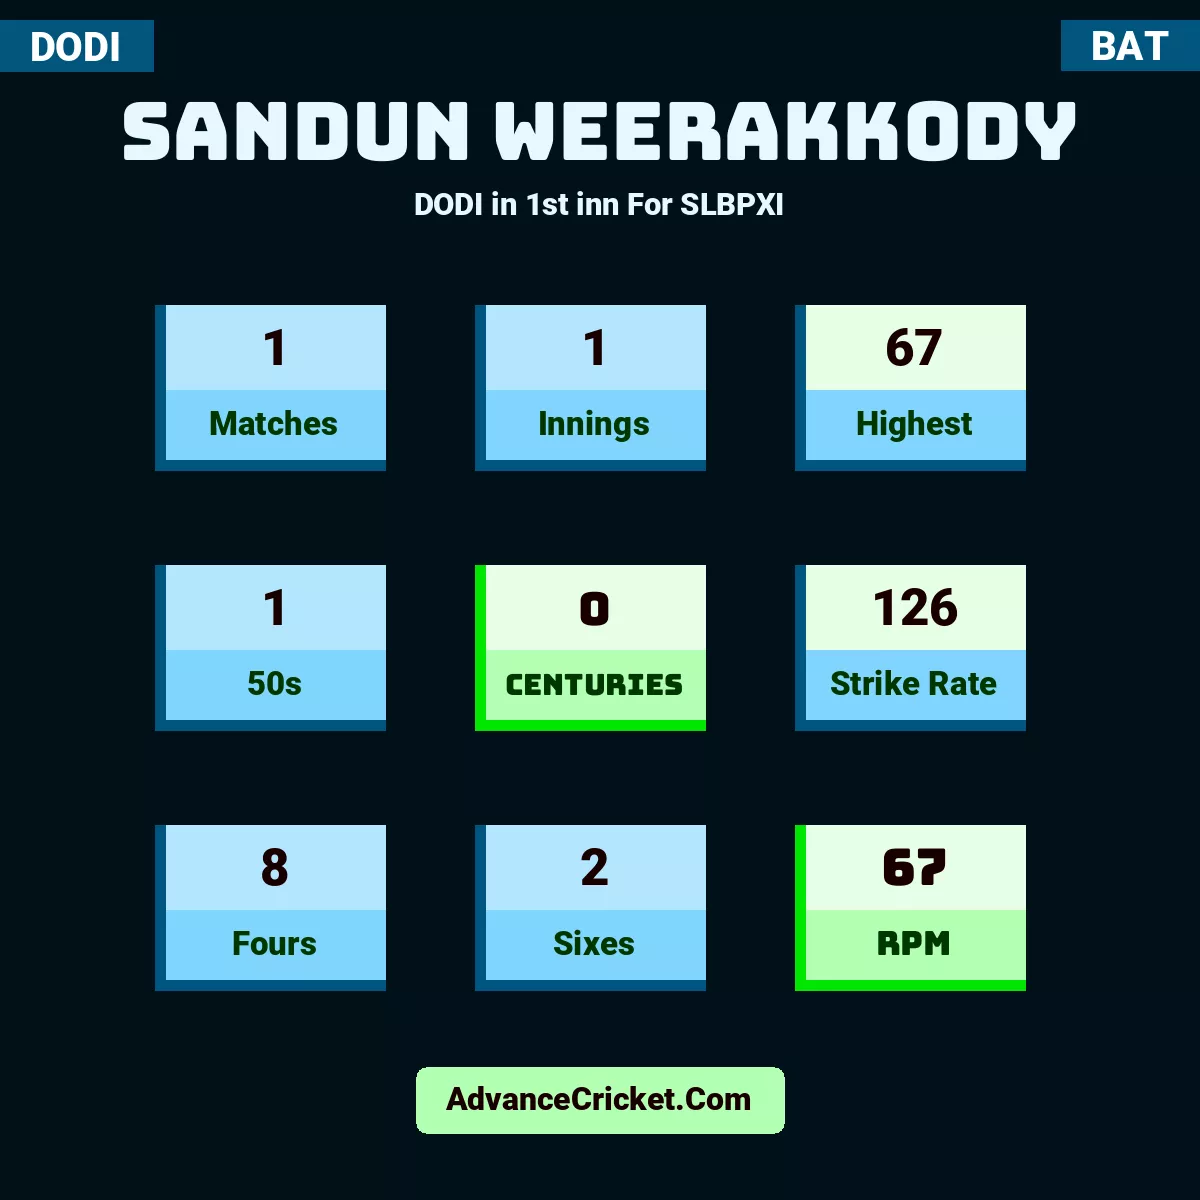 Sandun Weerakkody DODI  in 1st inn For SLBPXI, Sandun Weerakkody played 1 matches, scored 67 runs as highest, 1 half-centuries, and 0 centuries, with a strike rate of 126. S.Weerakkody hit 8 fours and 2 sixes, with an RPM of 67.